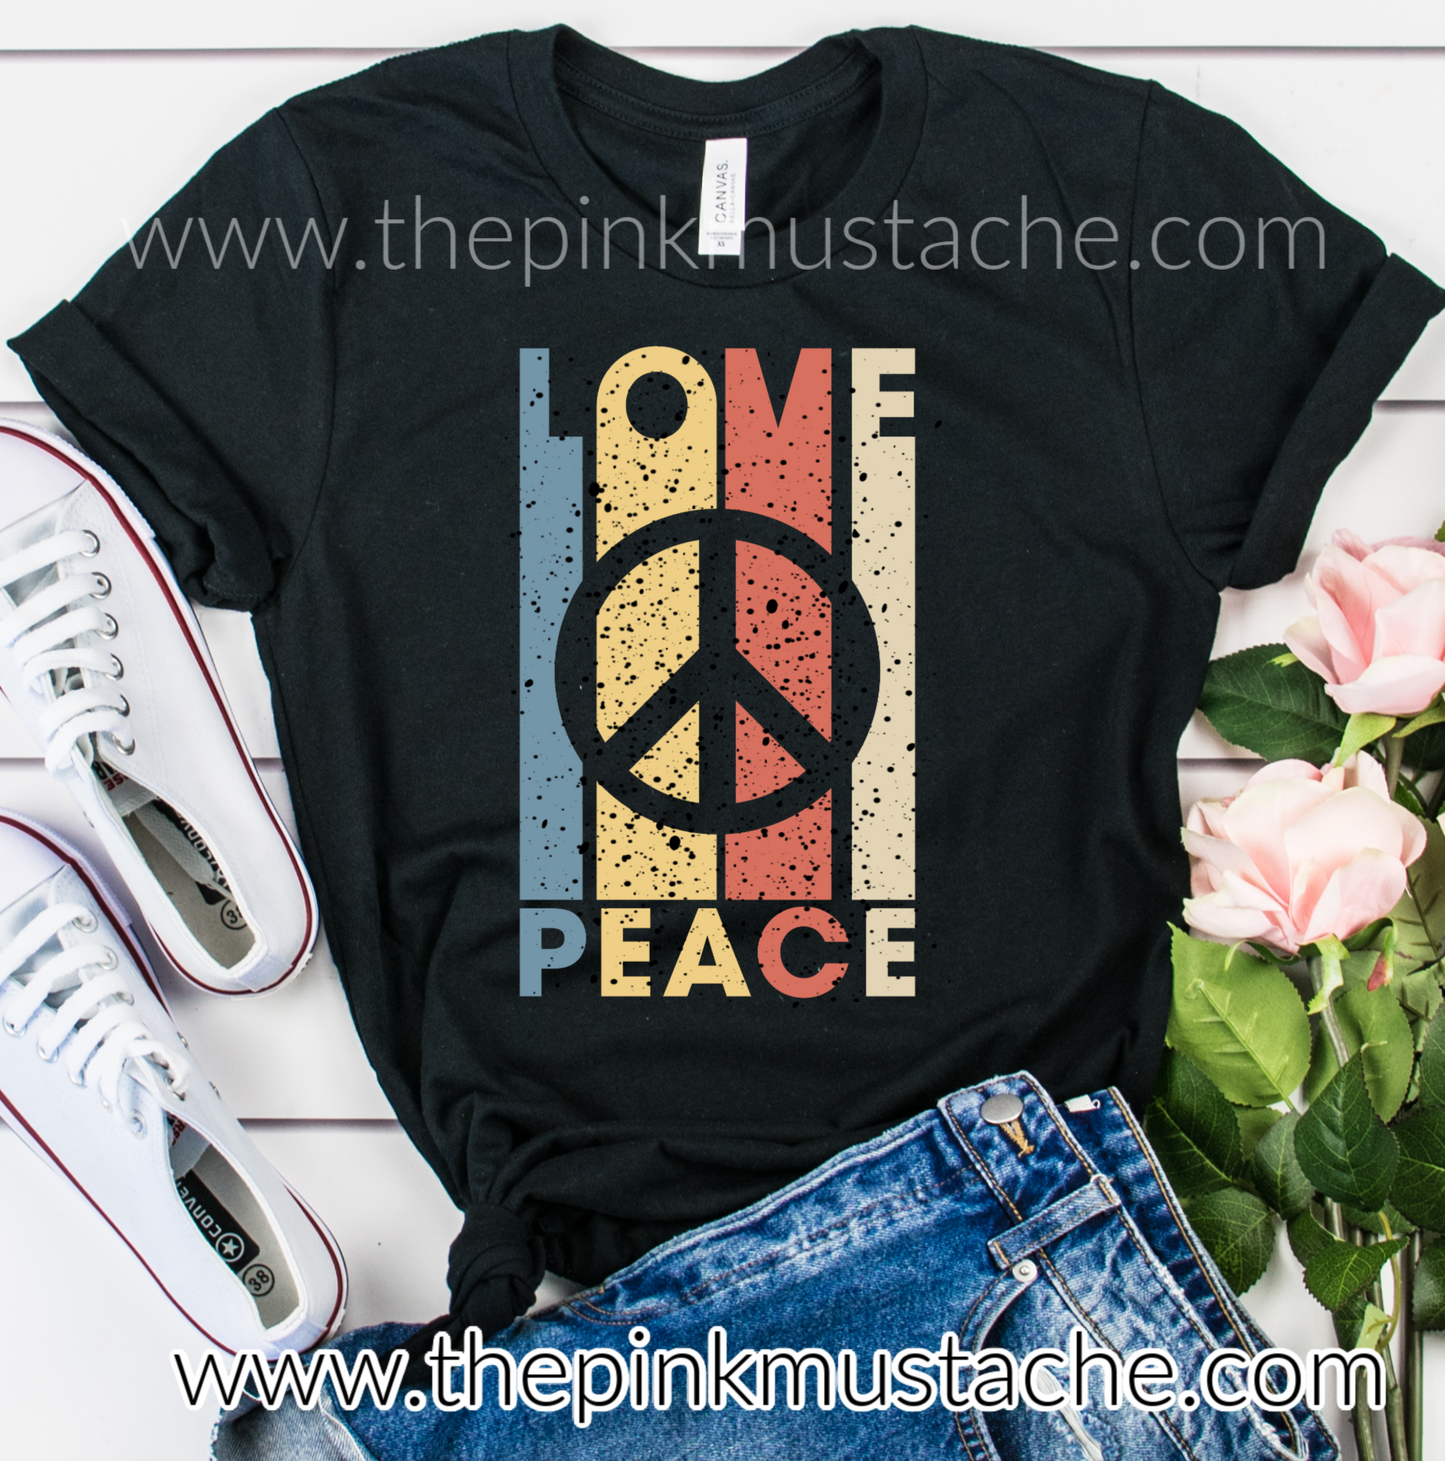 Peace and Love Hippie Tee / Bella Canvas / Peace Love Tee